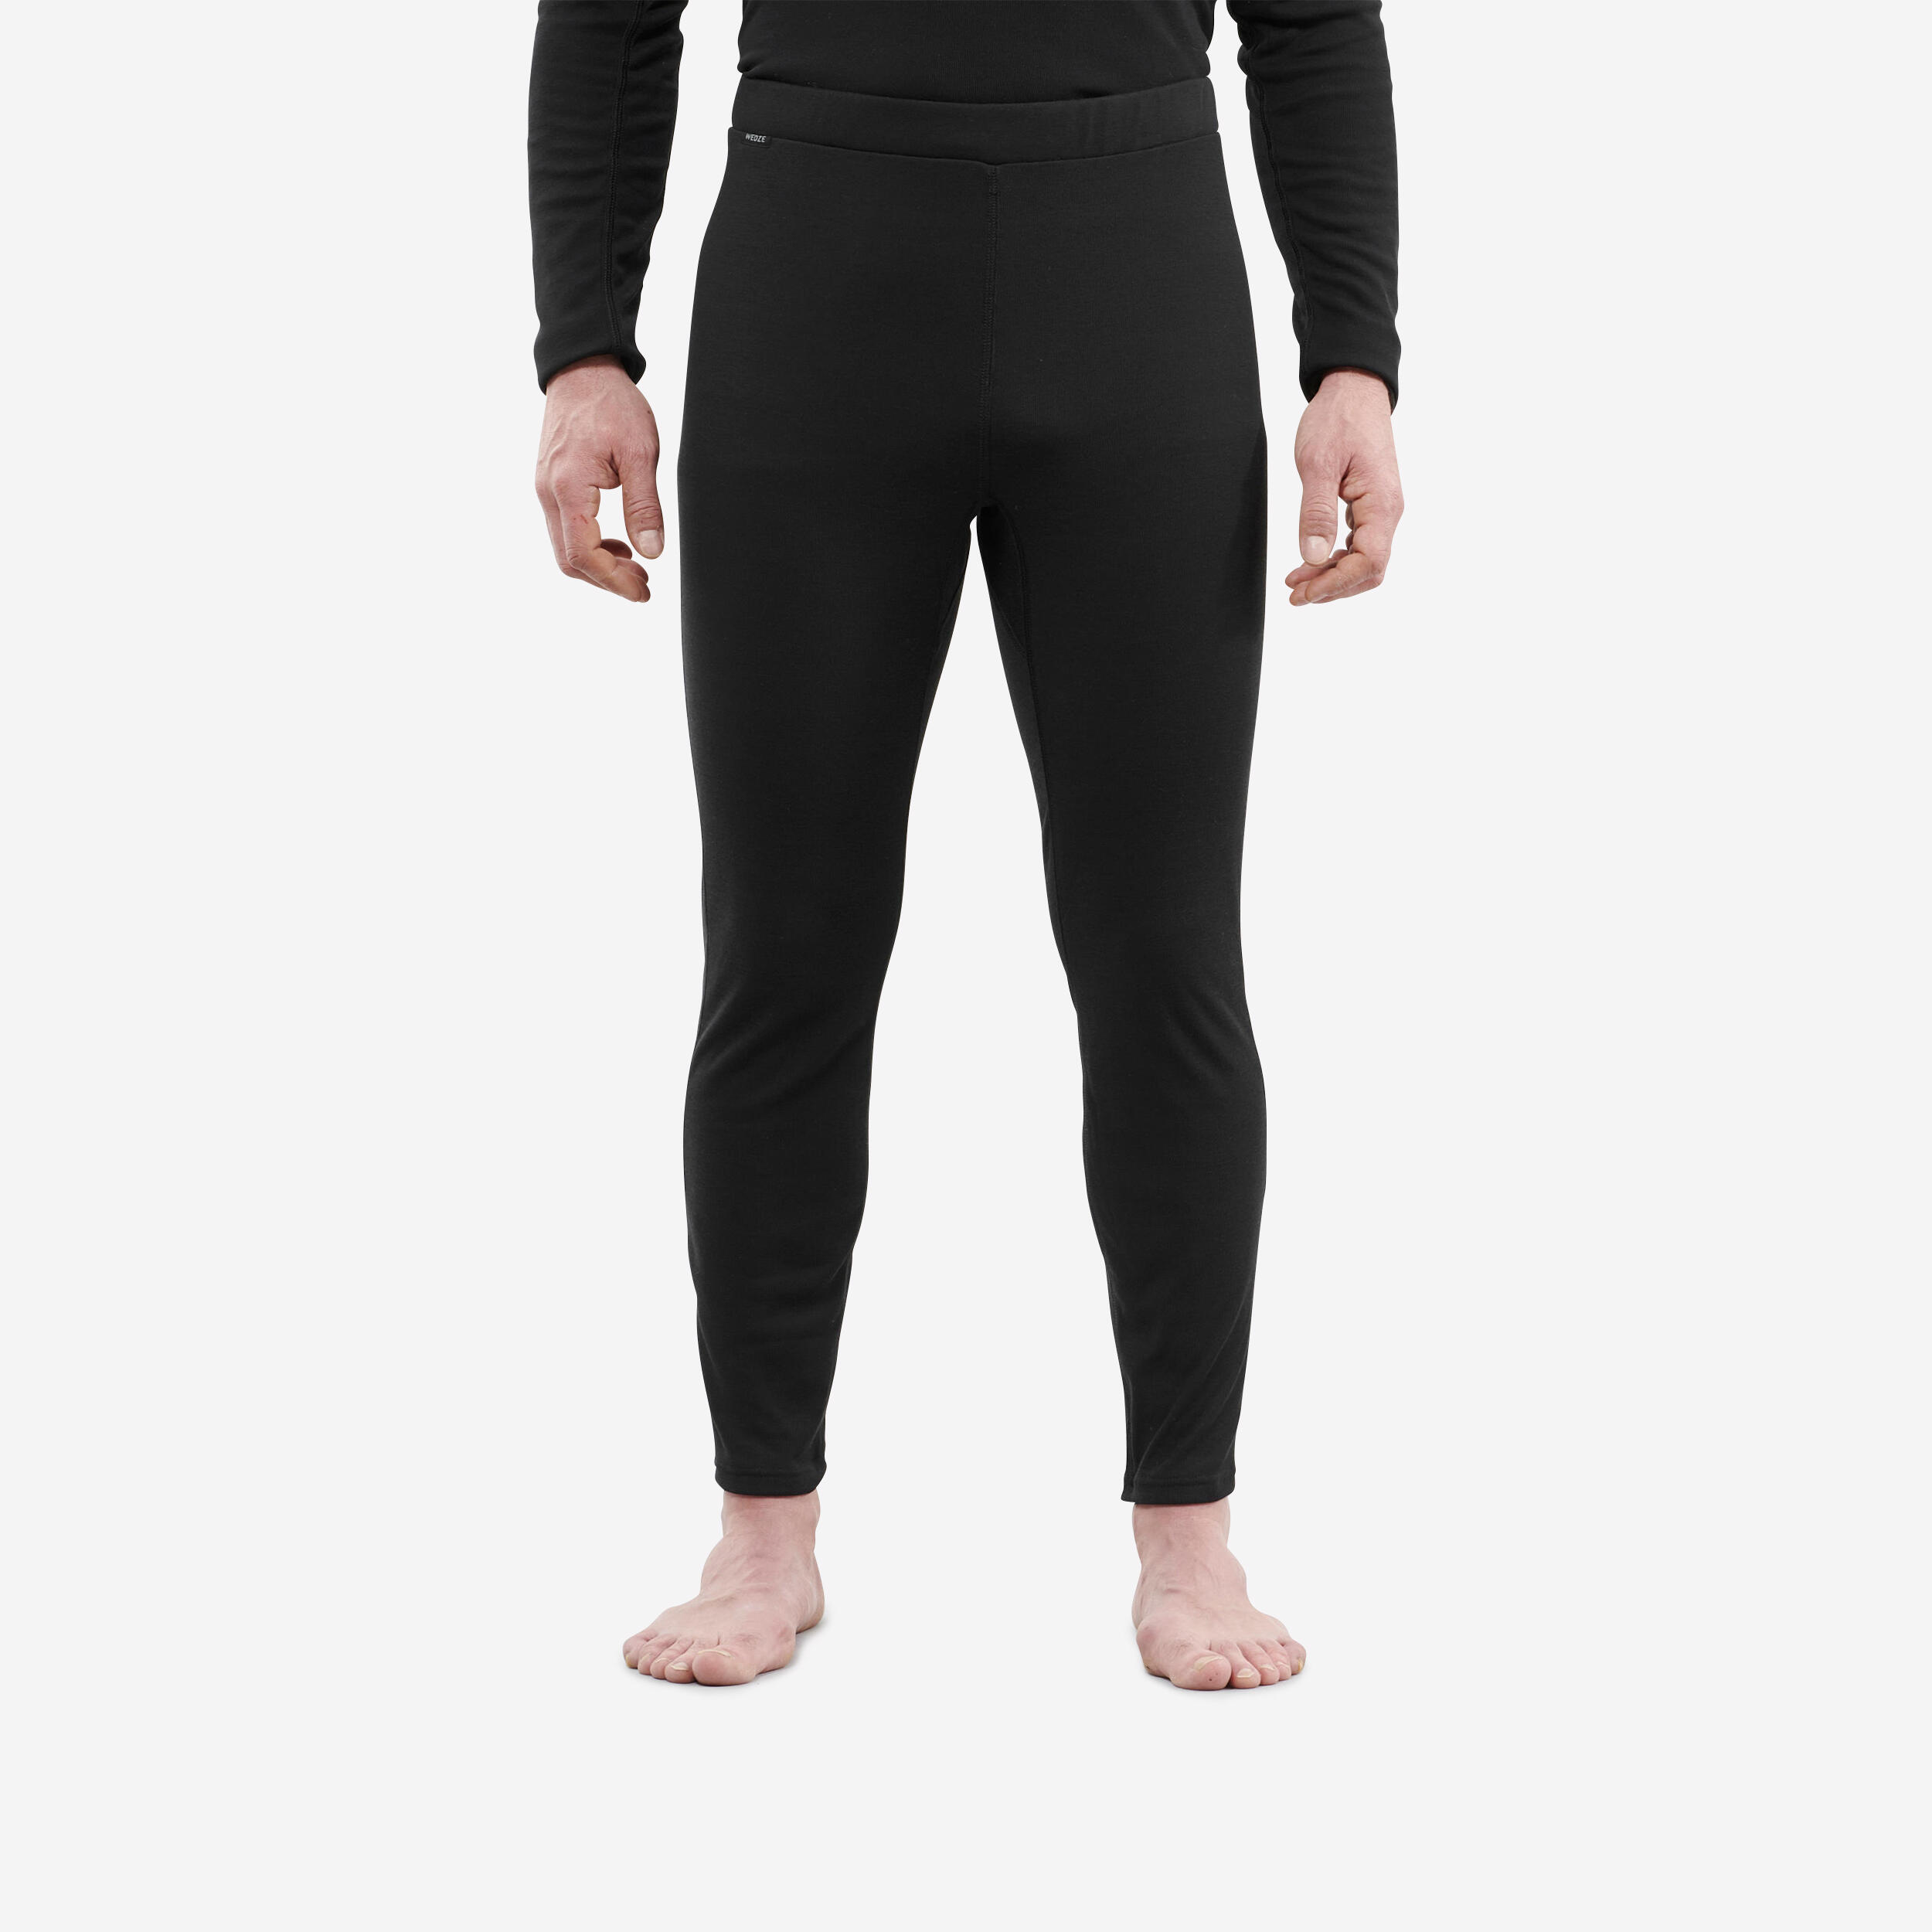 Body Glove Men's Thermal Underwear Base Layer Top & Long Johns